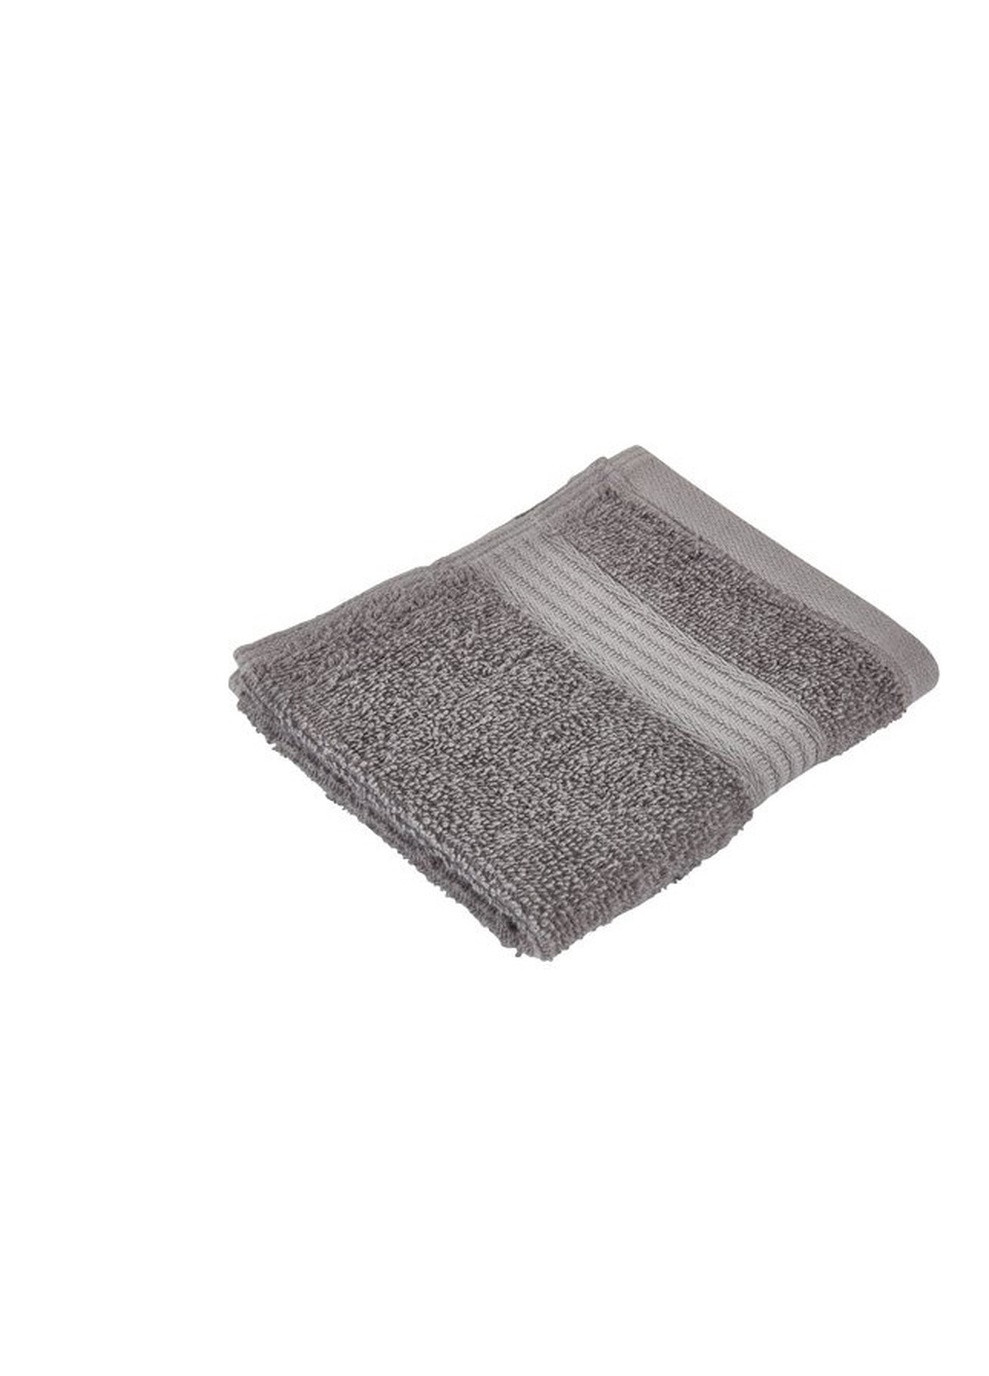 No Brand полотенце хлопок 30.5х28см серый серый производство - Китай